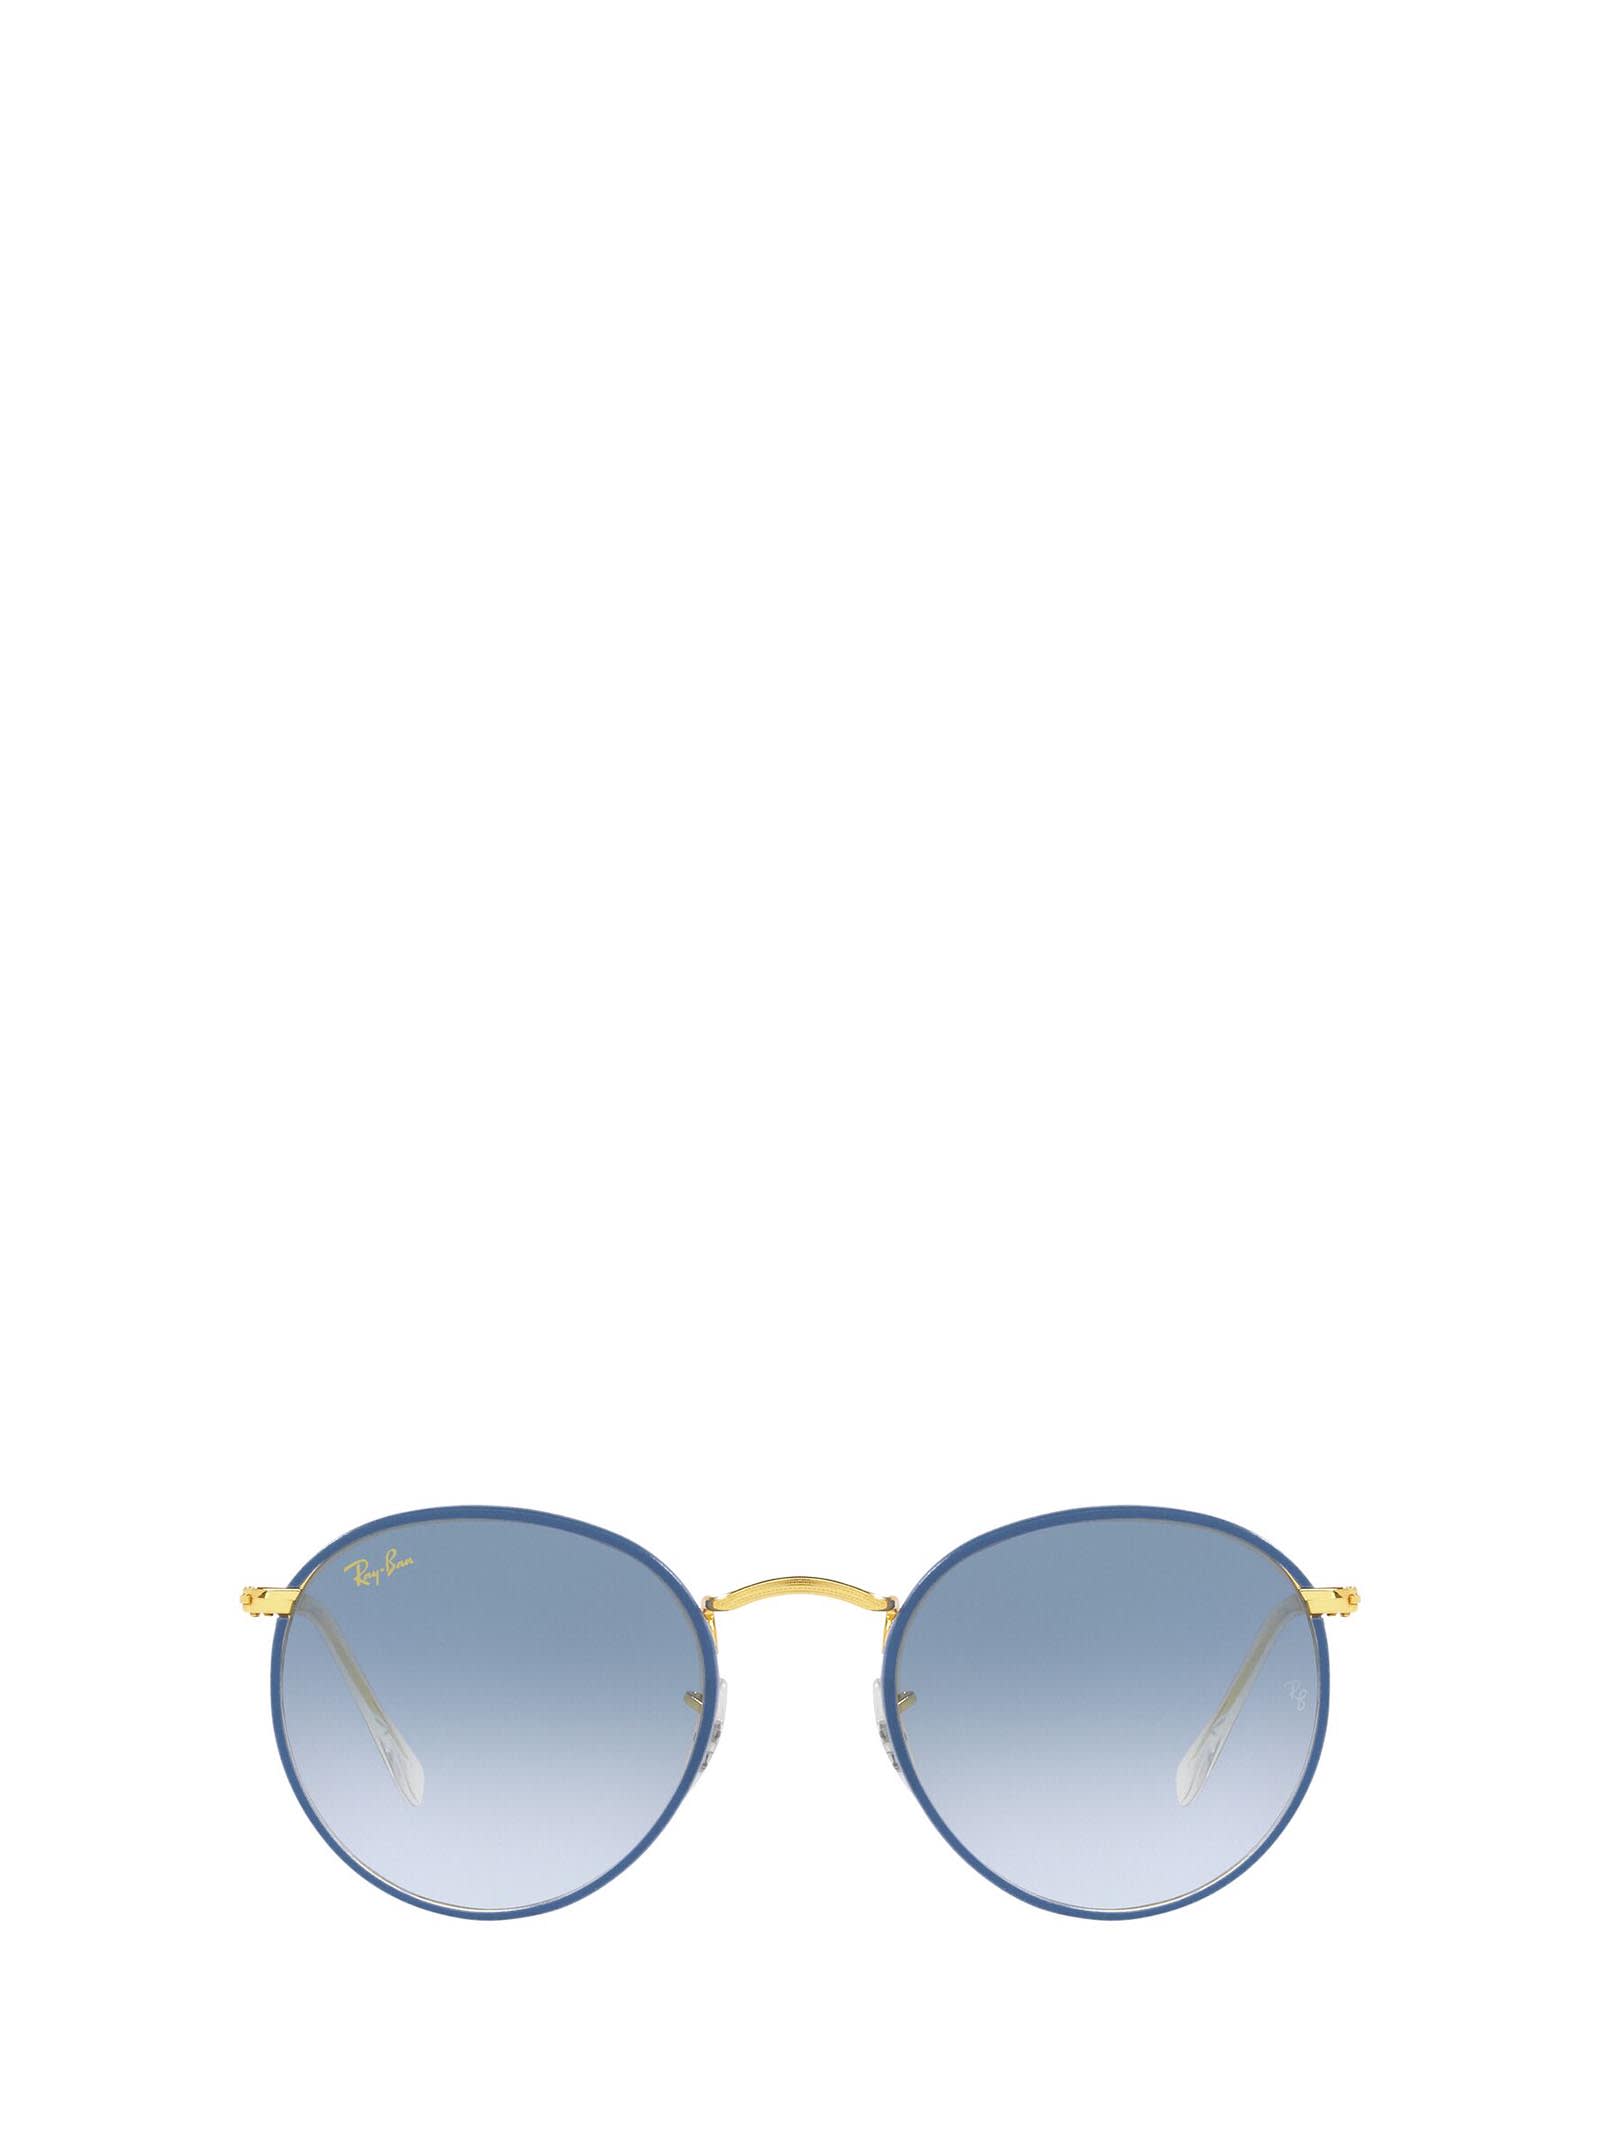 Ray Ban Ray-ban Rb3447jm Light Blue On Legend Gold Sunglasses